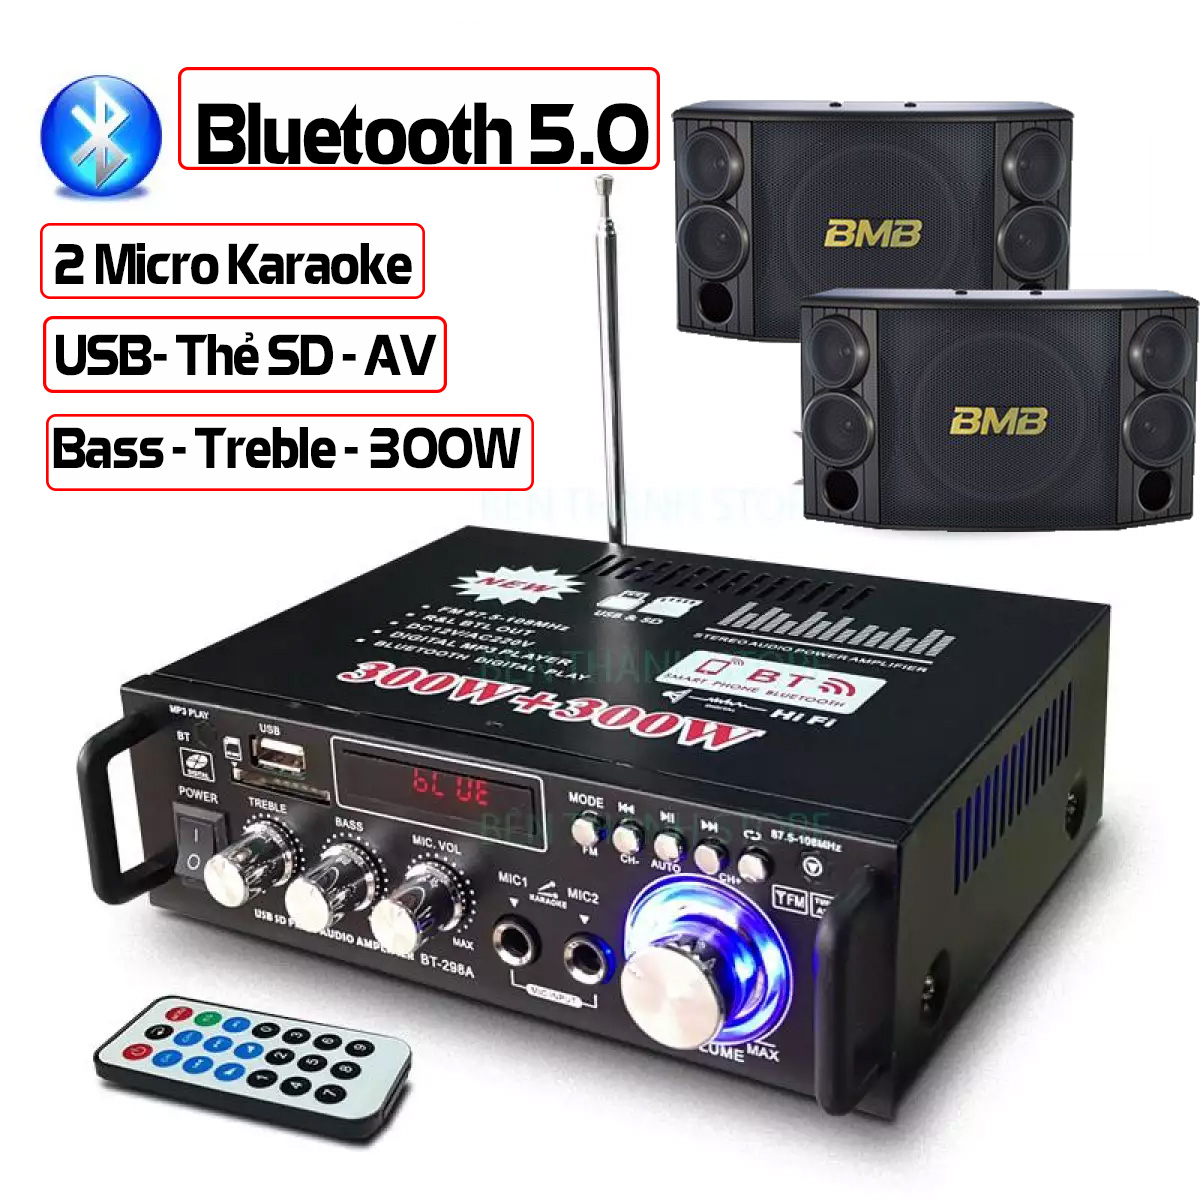 Amply 5.1 karaoke,Ampli karaoke mini, Ampli bluetooth, Amly mini Karaoke Kentiger HY 803, âm thanh cực chất, dễ dàng sử dụng